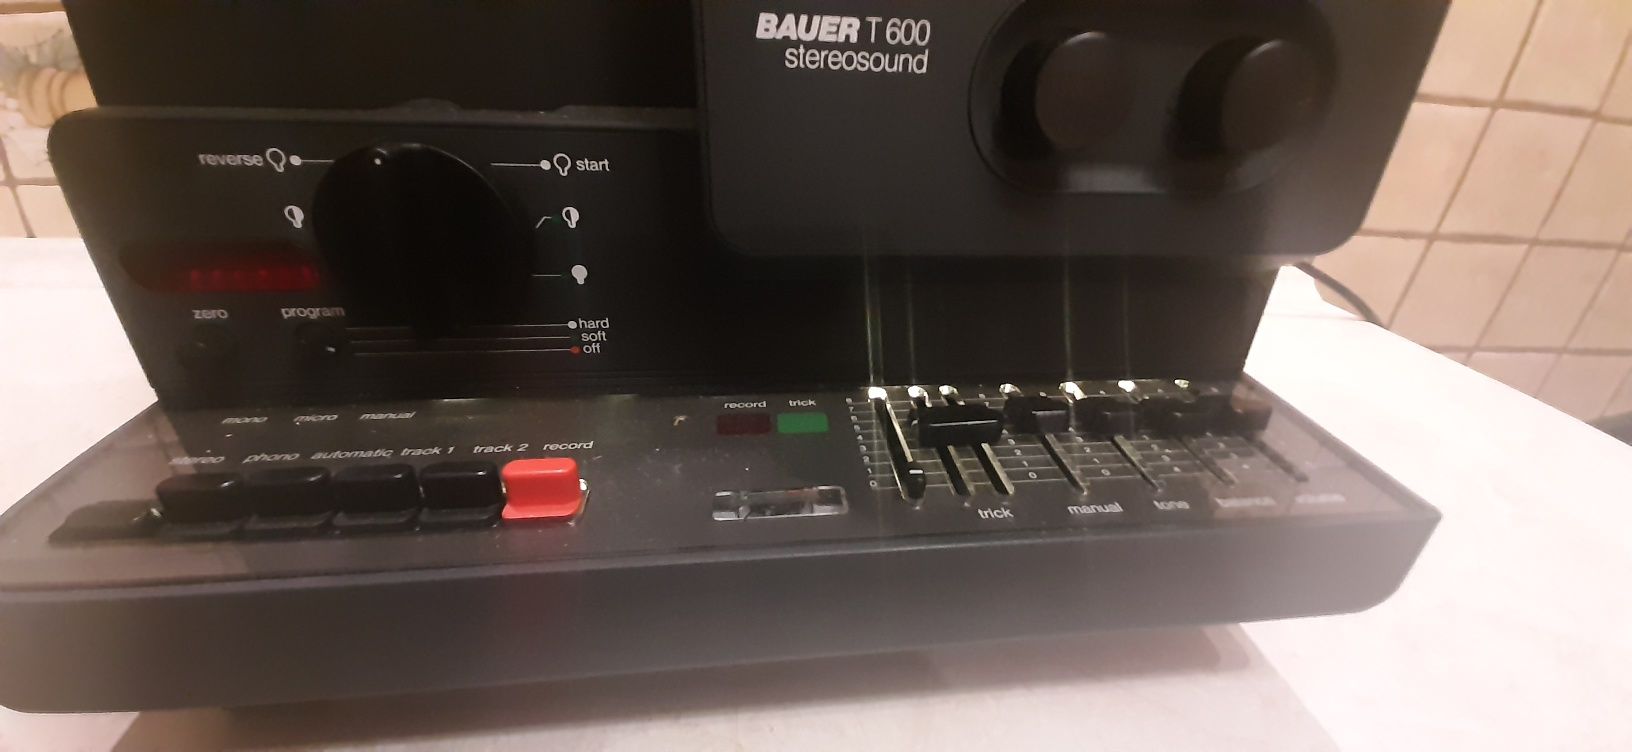 Projektor Bauer T1600 stereosound